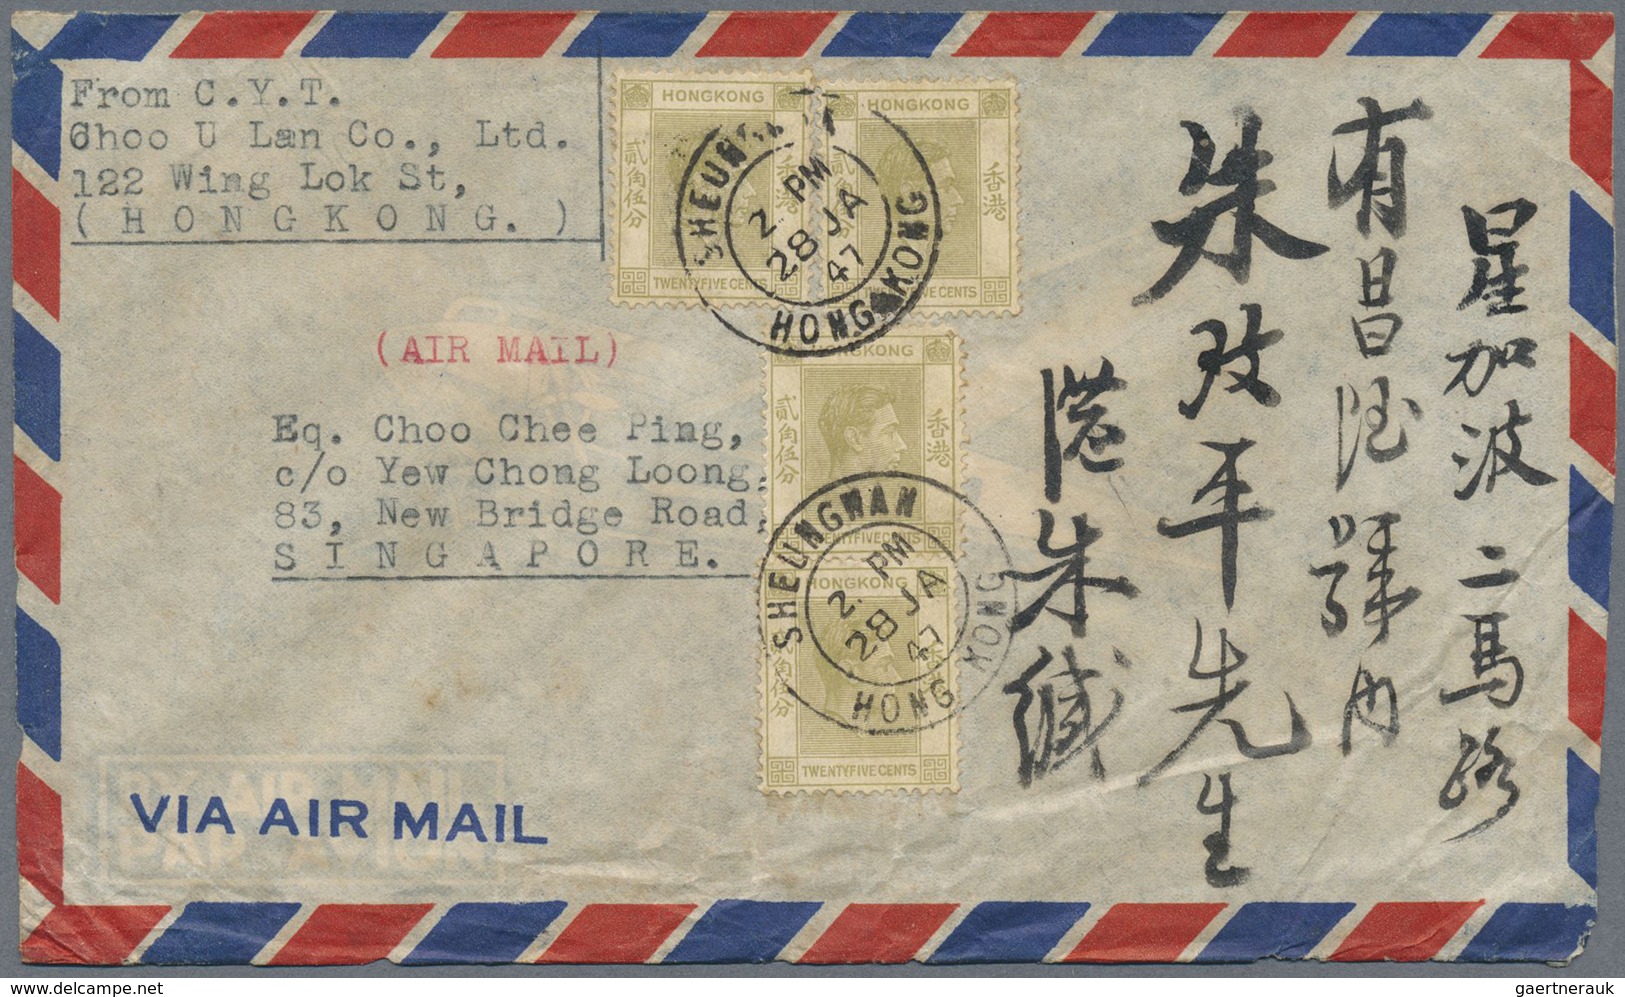 Br/ Hongkong: 1907/65 (ca.), covers/used ppc (97, often used to Singapore or Bangkok), FDC 1937/73 (9),